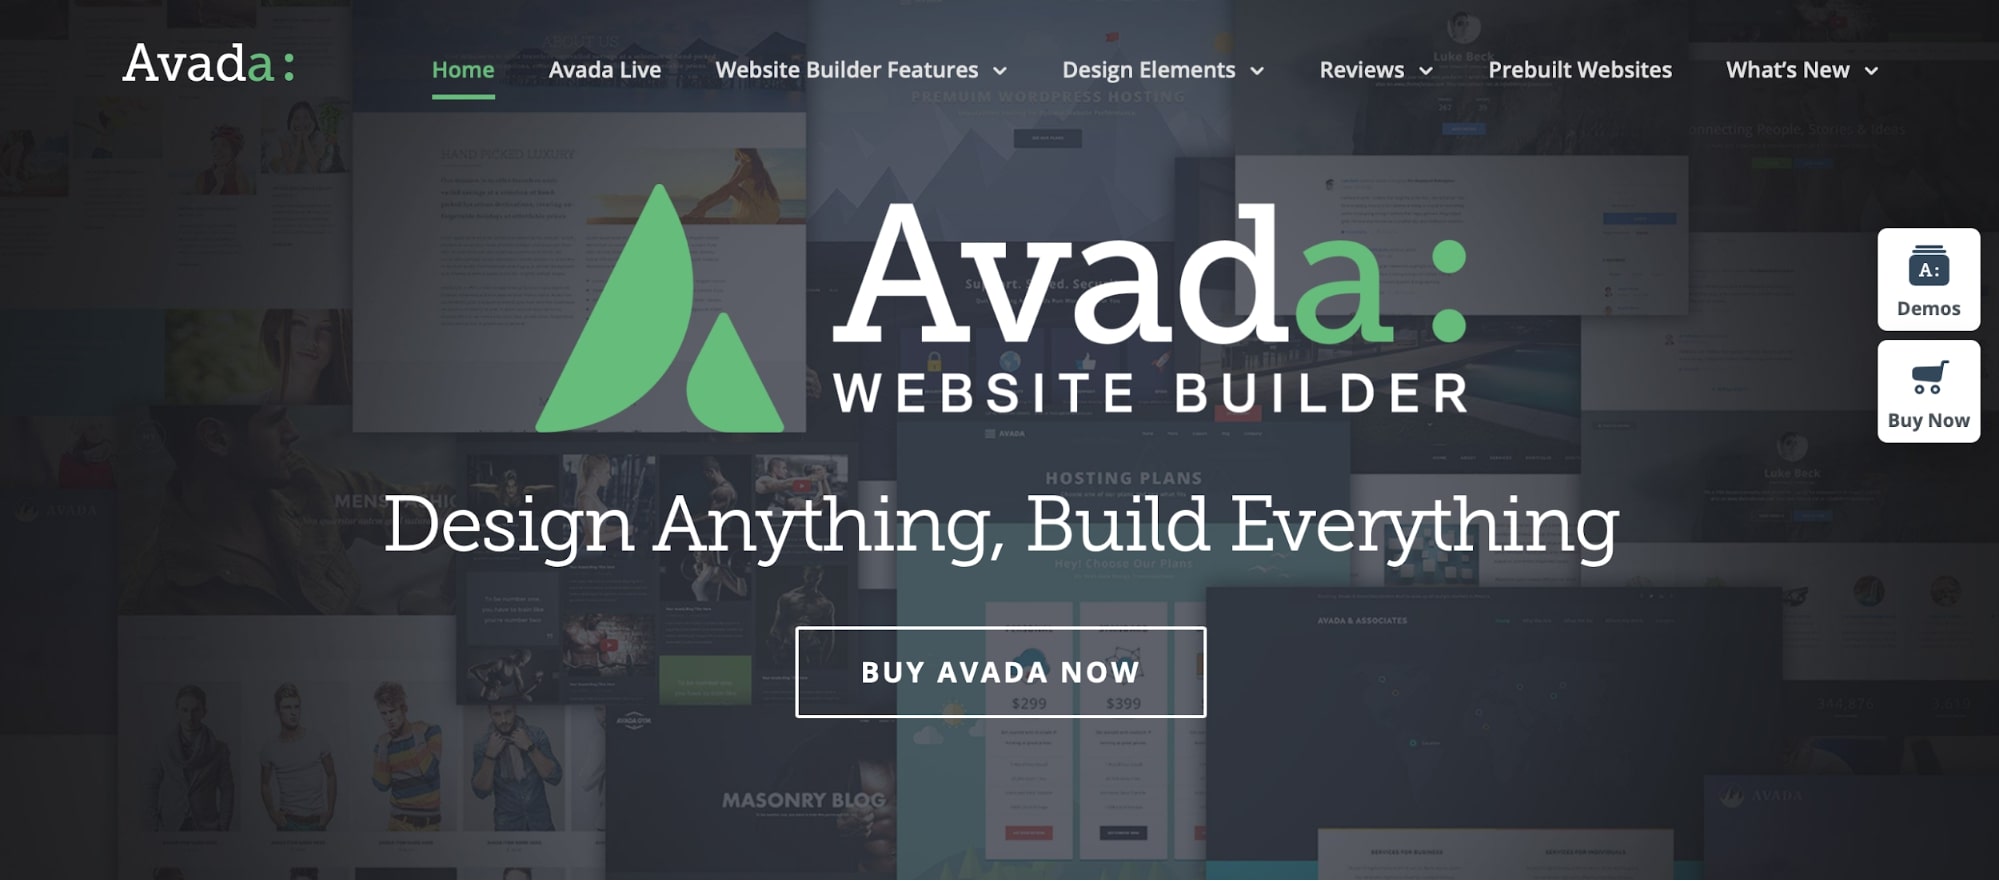 Avada website